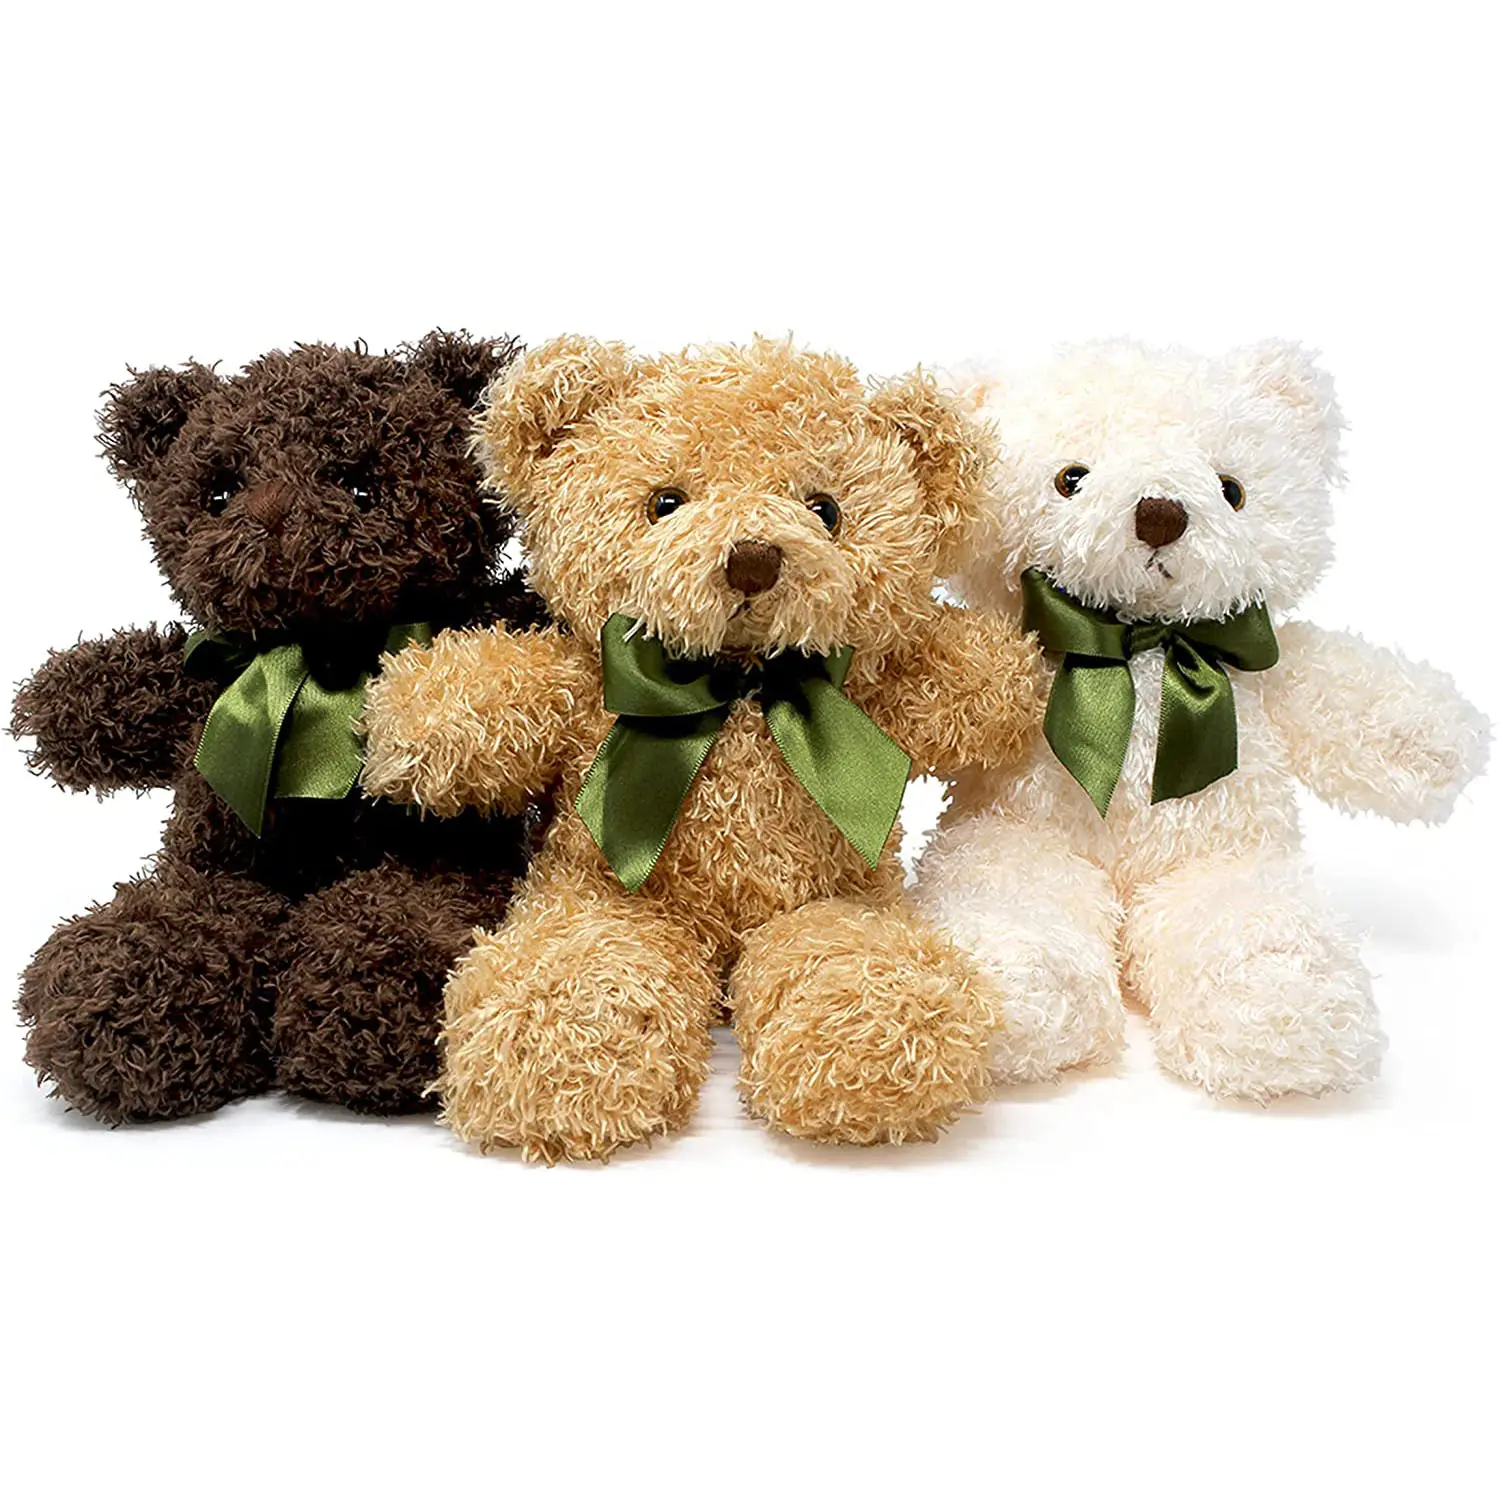 China Suppliers Wholesale Soft Bear Stuffed Plush Teddy Bear 3-Pack of Stuffed Bears